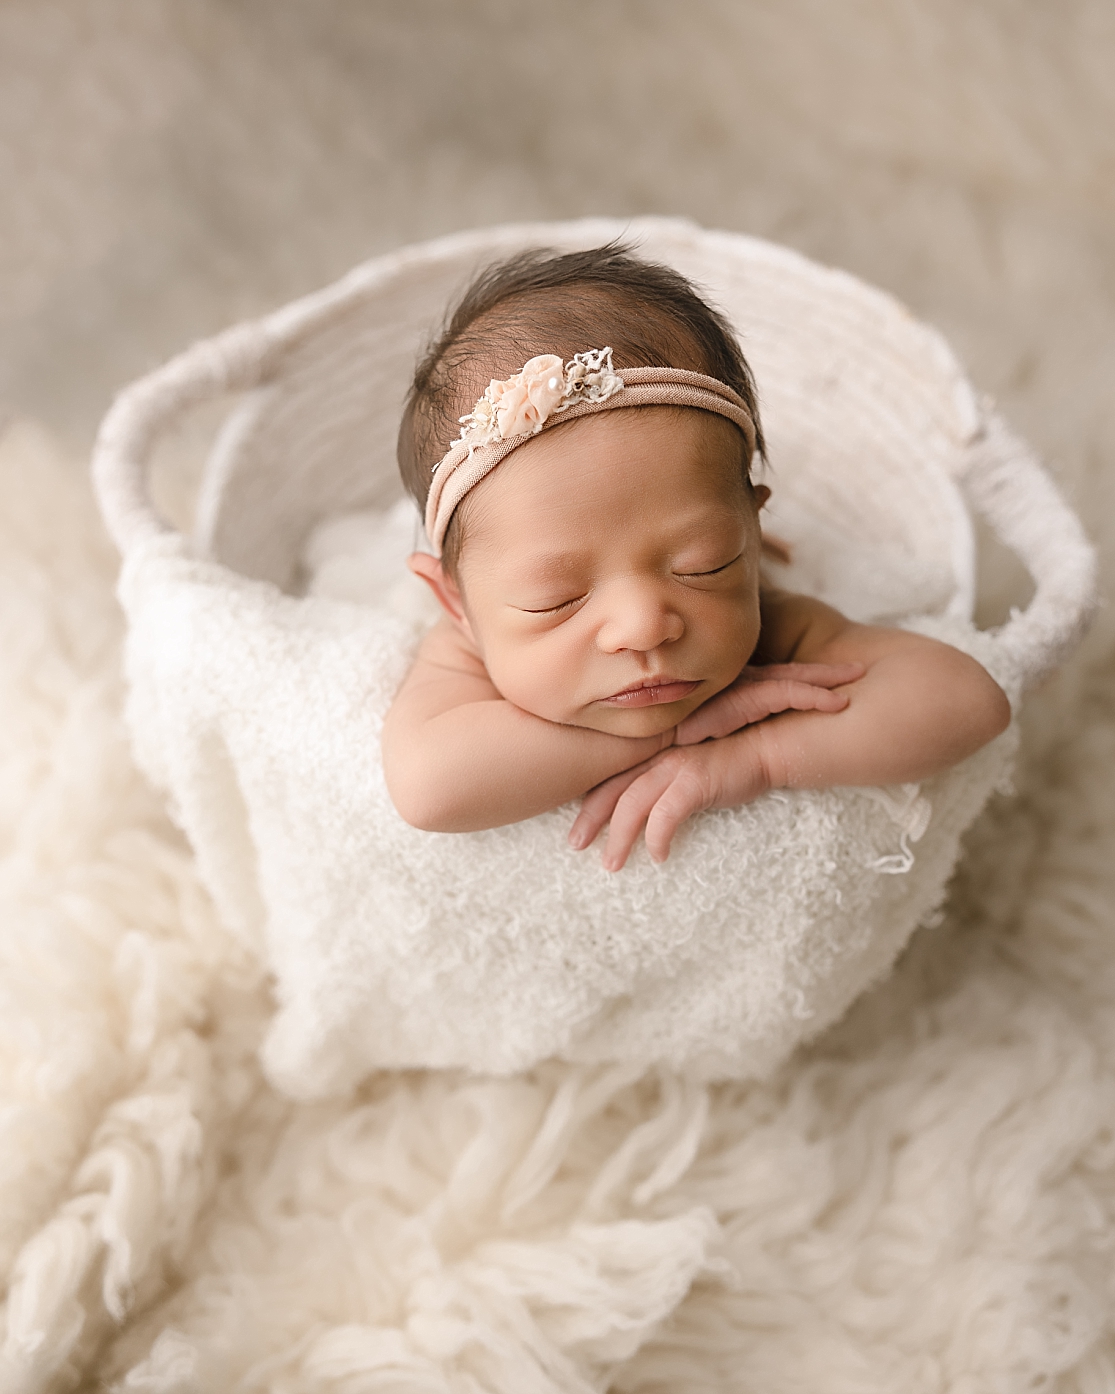 newborn baby girl sleeping in a basket Andaluz Waterbirth Center